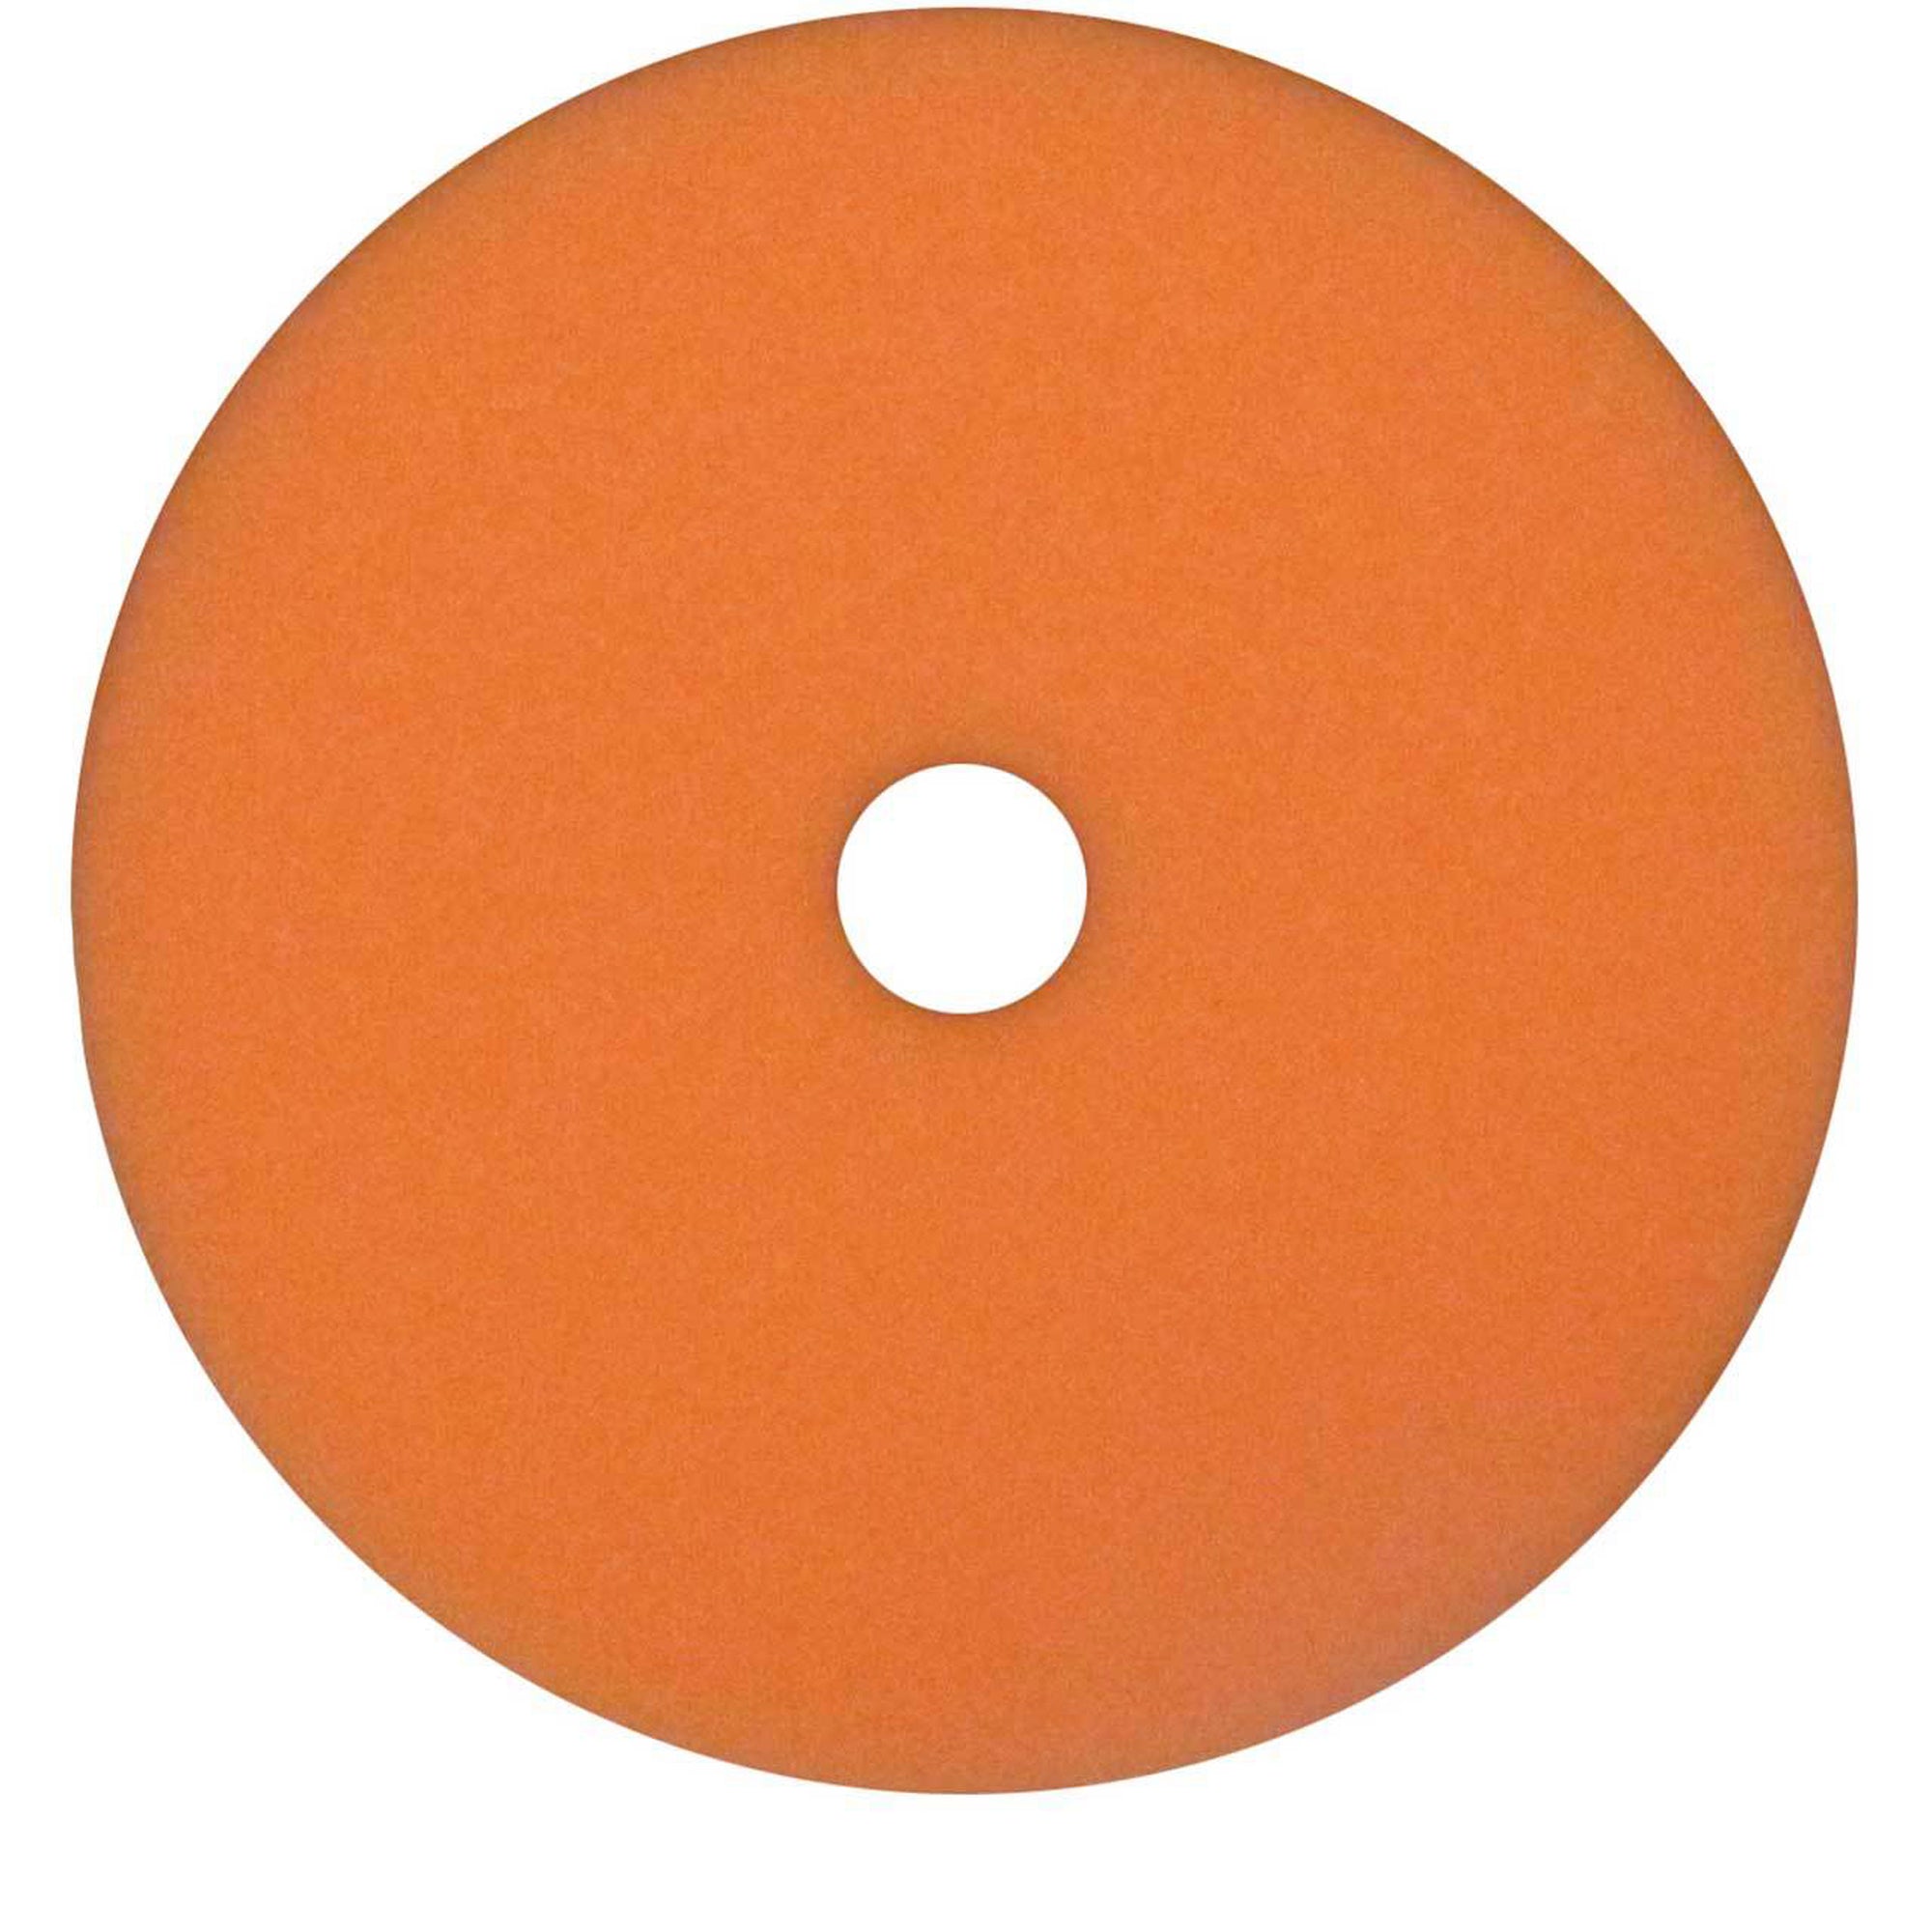 Wizards 11603 21 DA Polisher Orange Foam Polishing Pad - 6"